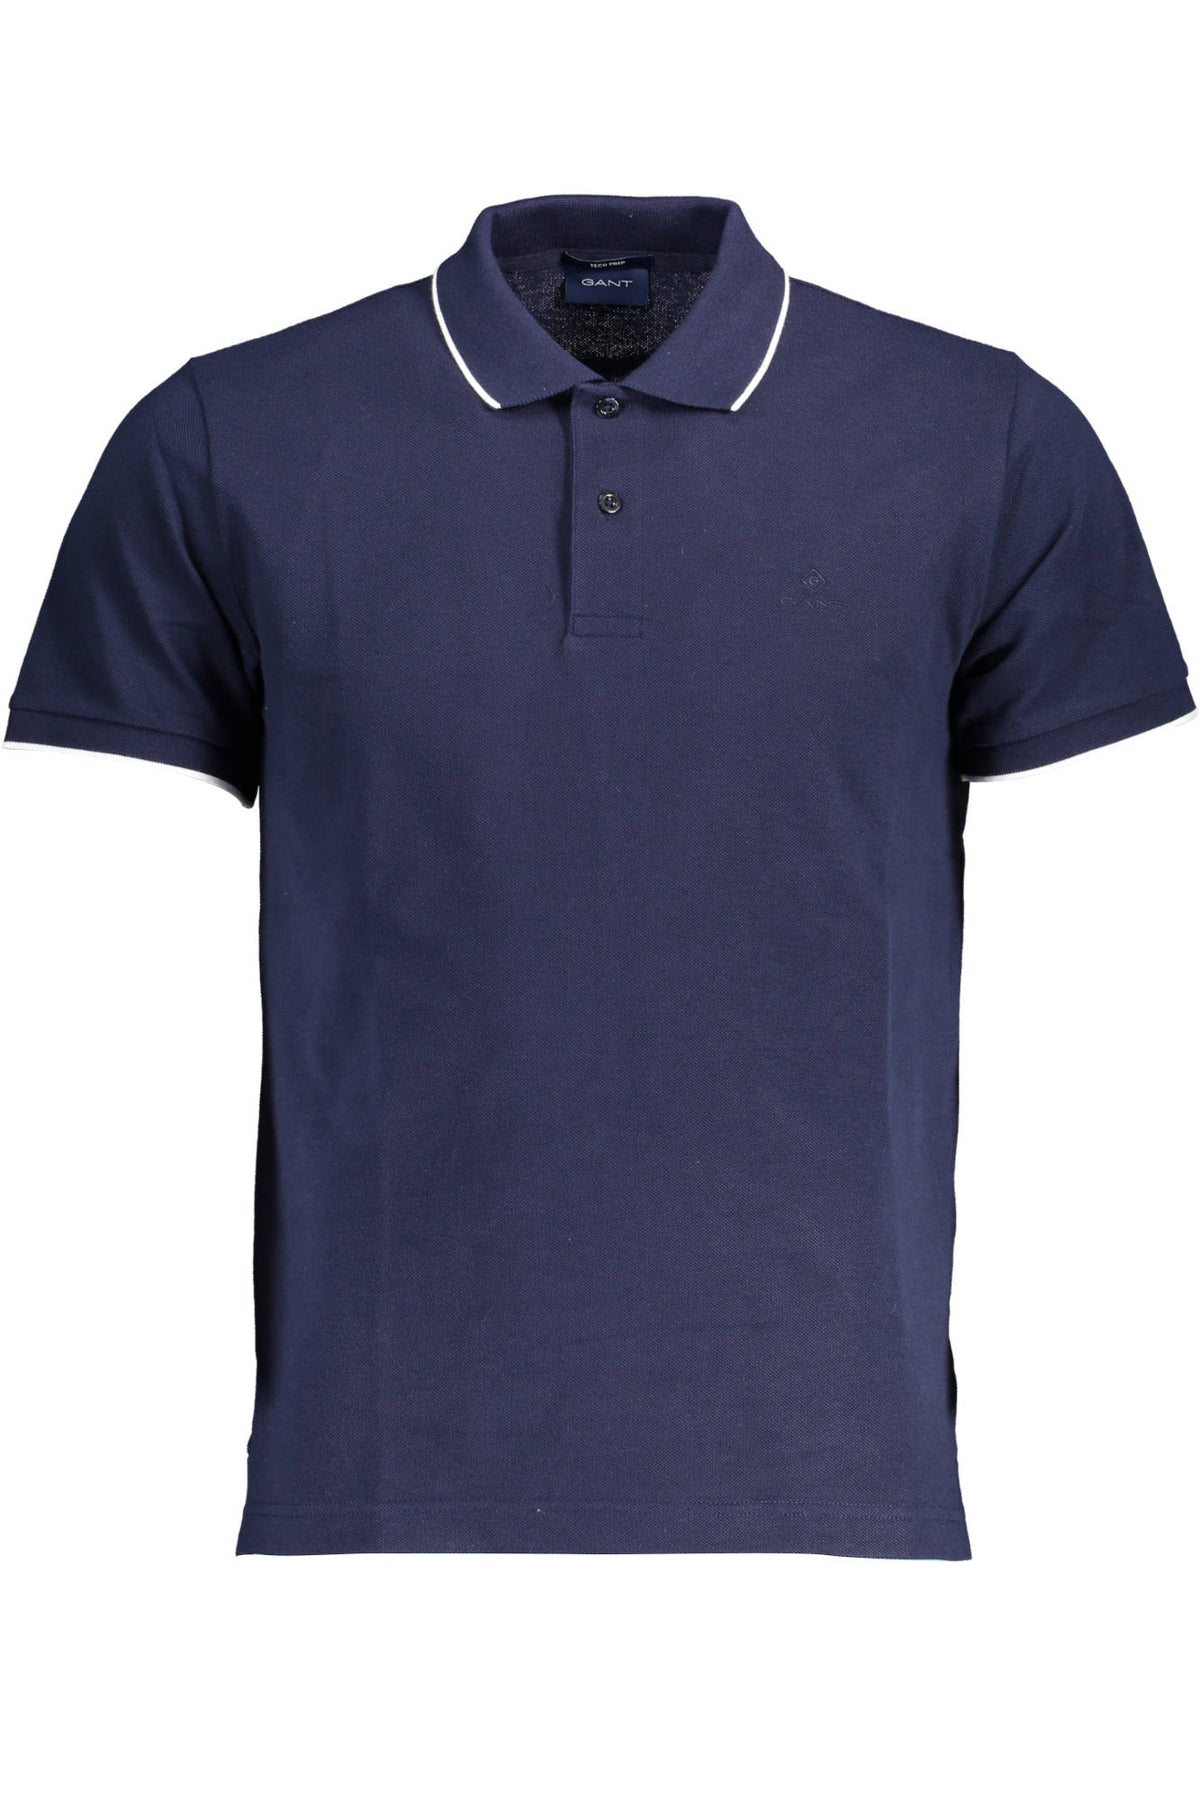 Gant Herren Poloshirt Polohemd T-Shirt kurzarm, mit Knöpfen